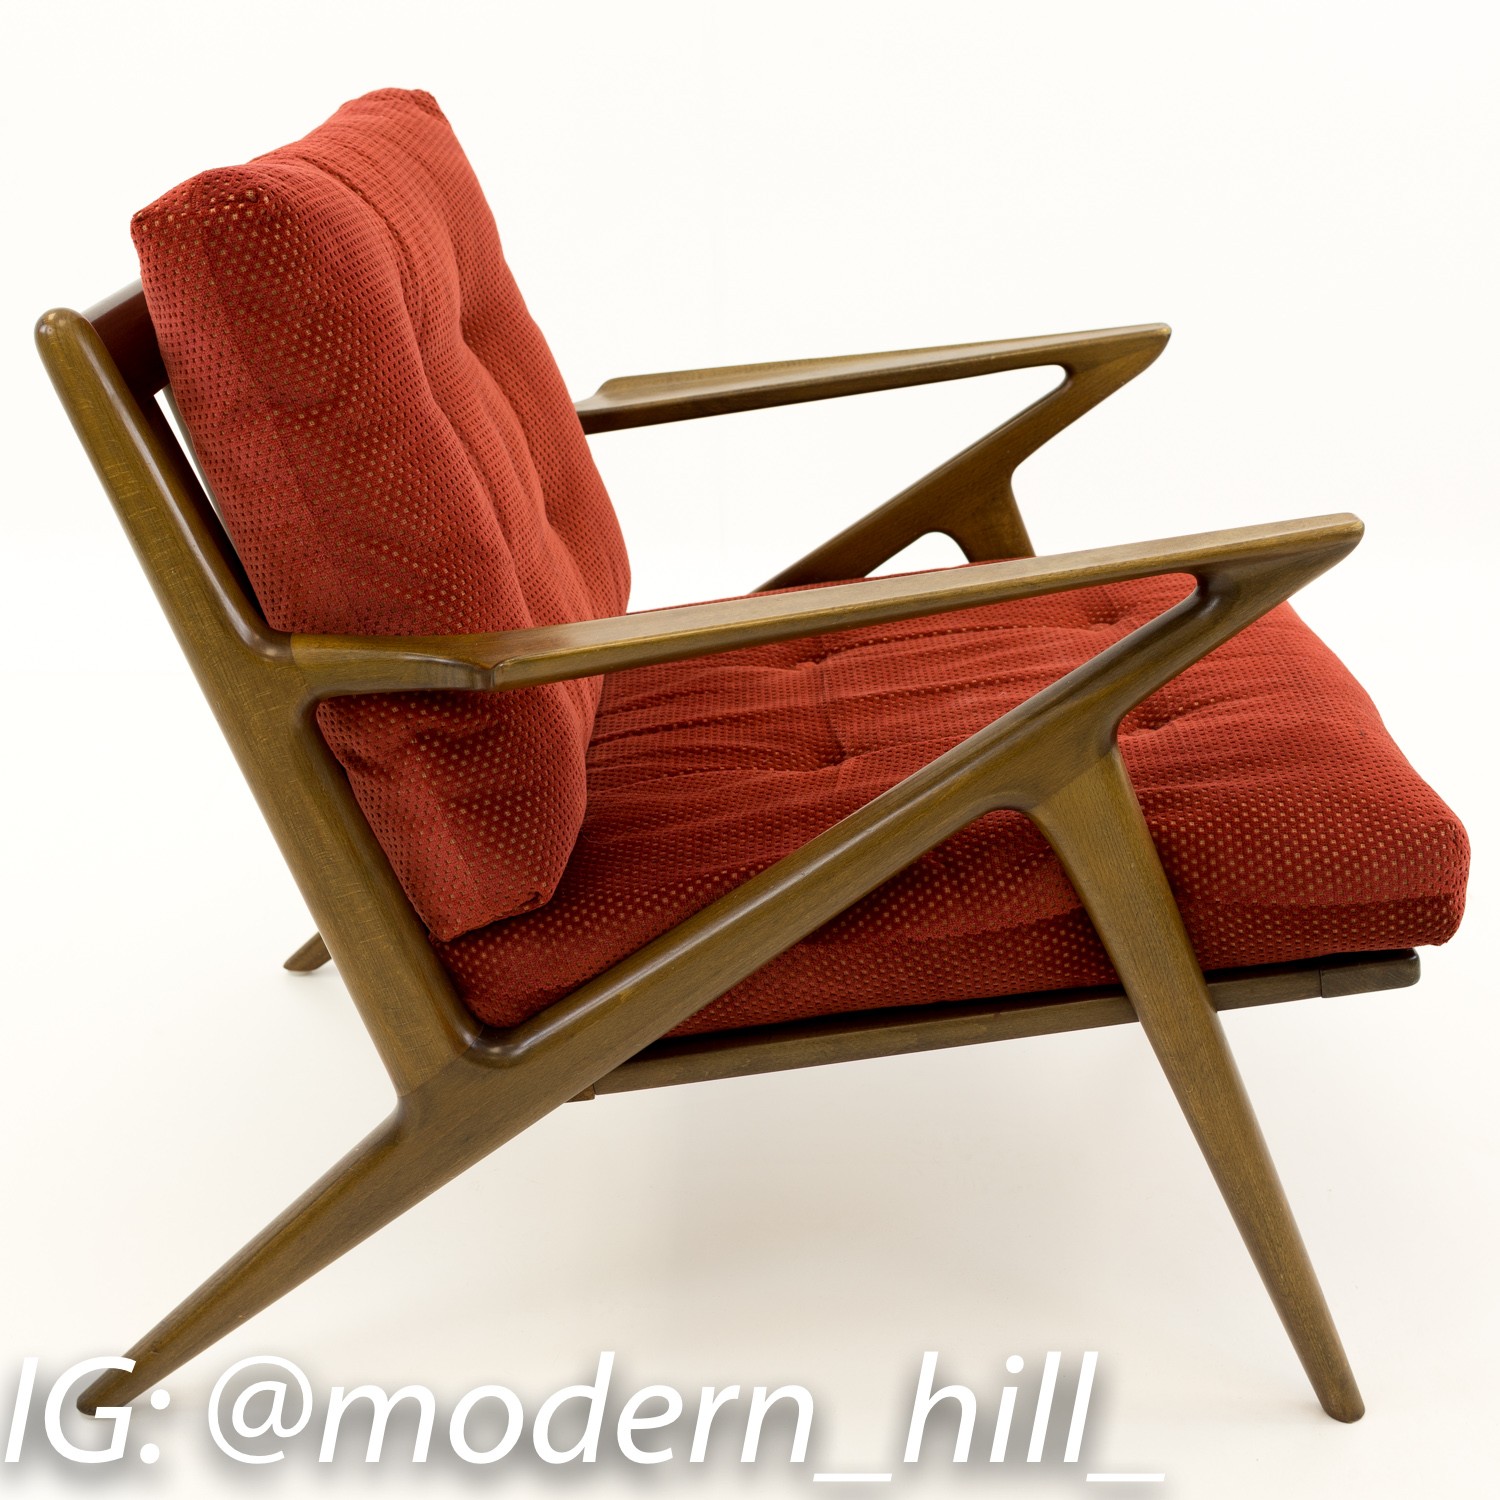 Kofod Larsen for Selig Z Chairs - Rare Mid Century